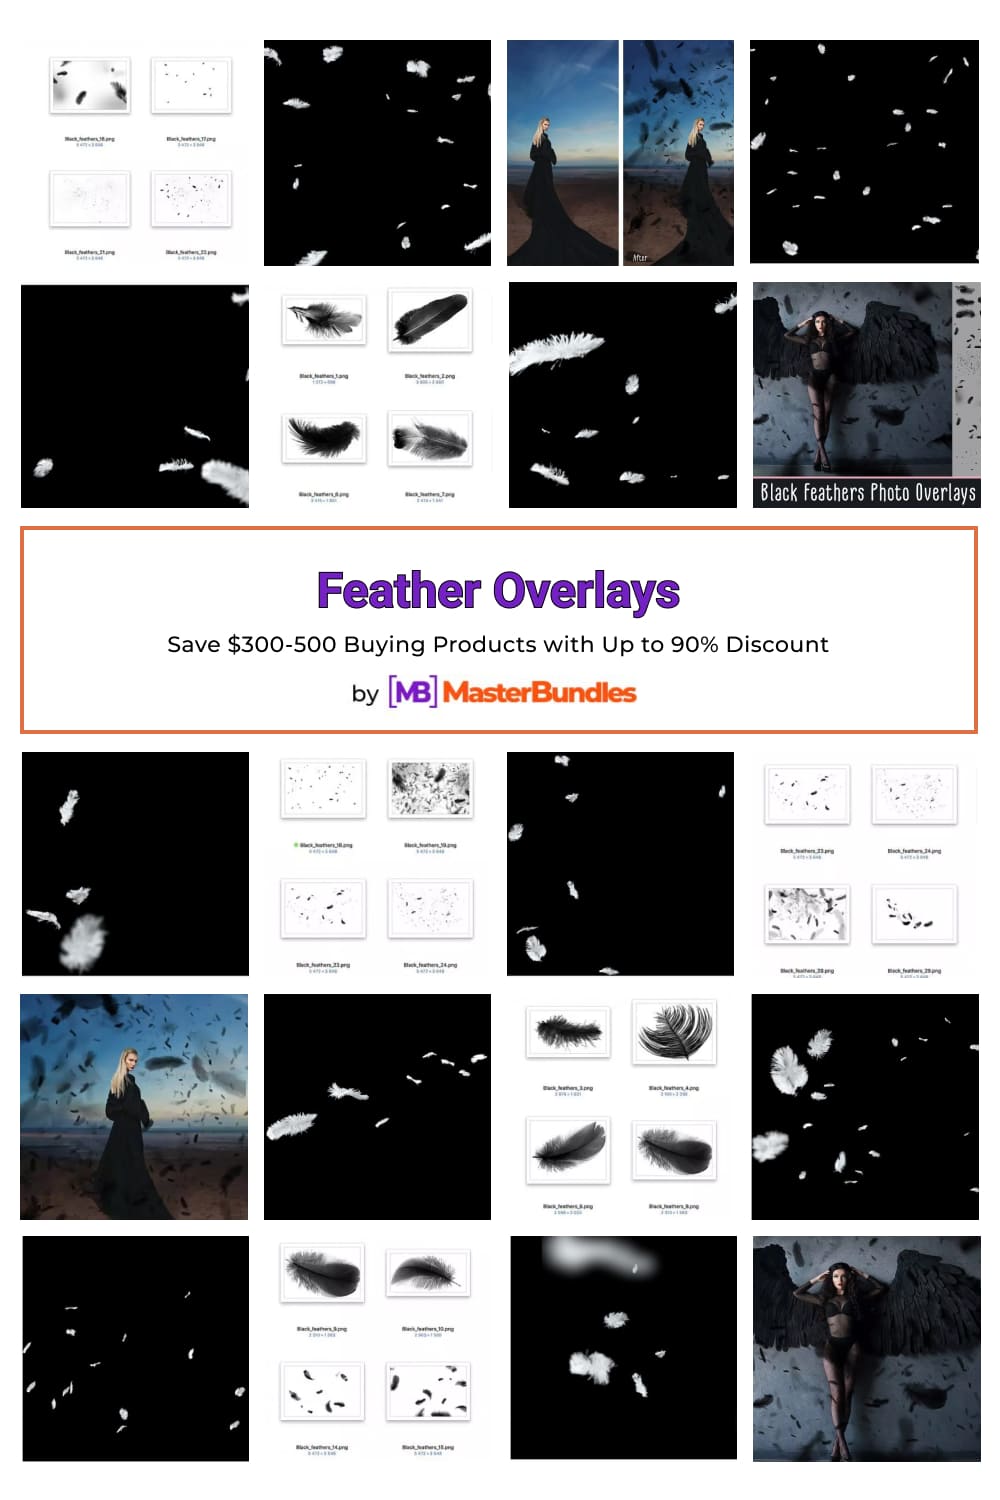 Feather Overlays Pinterest image.